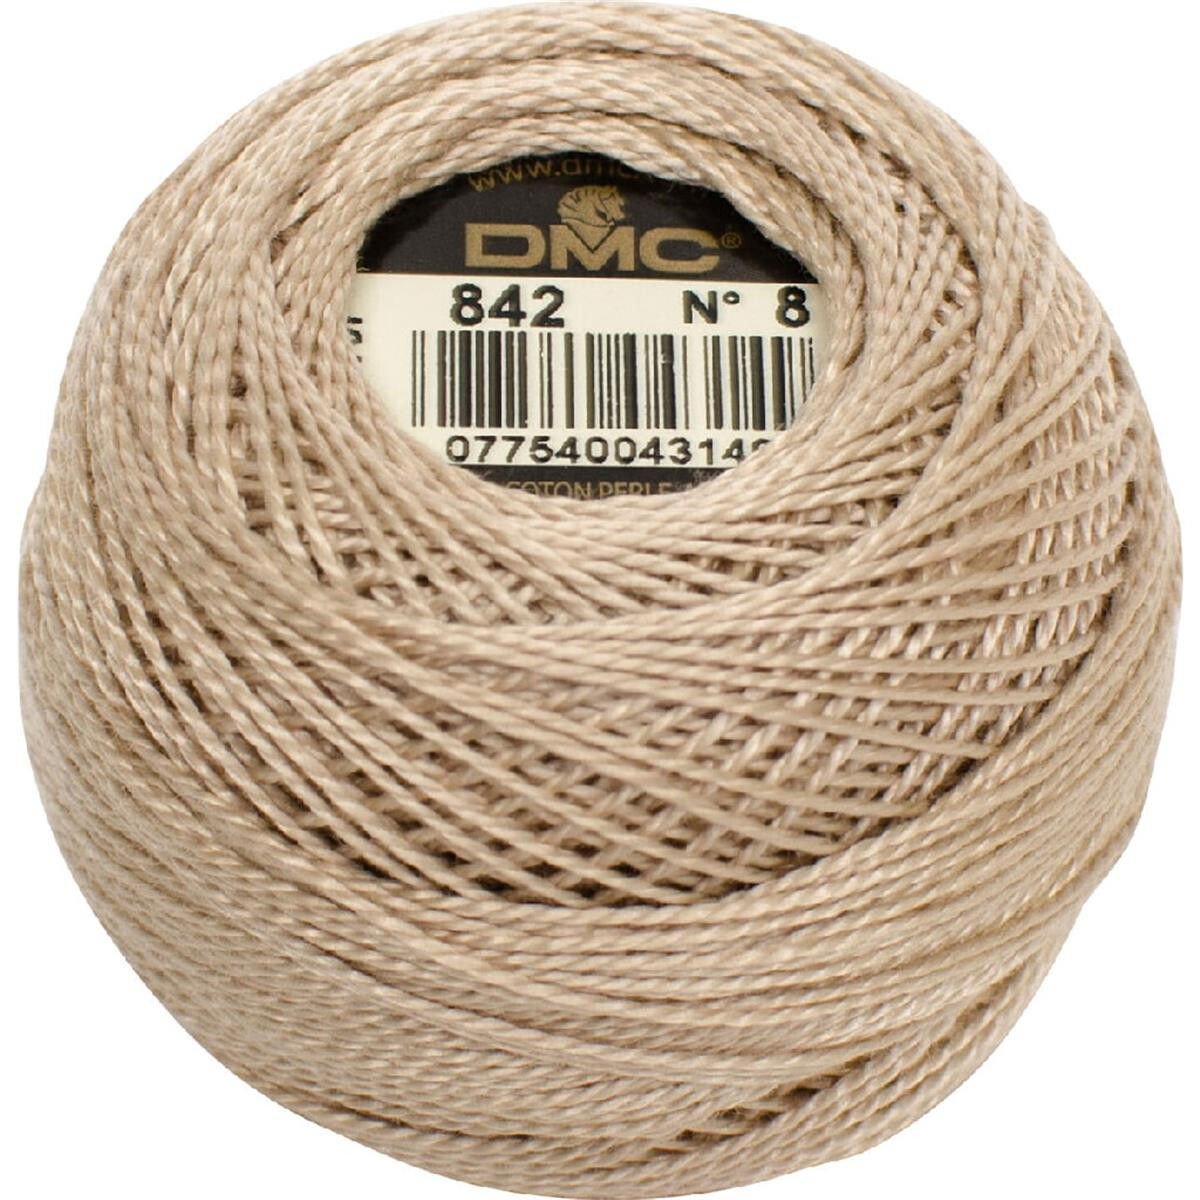 DMC Pearl Cotton on a ball Size 8, 10g, 116A/8-842